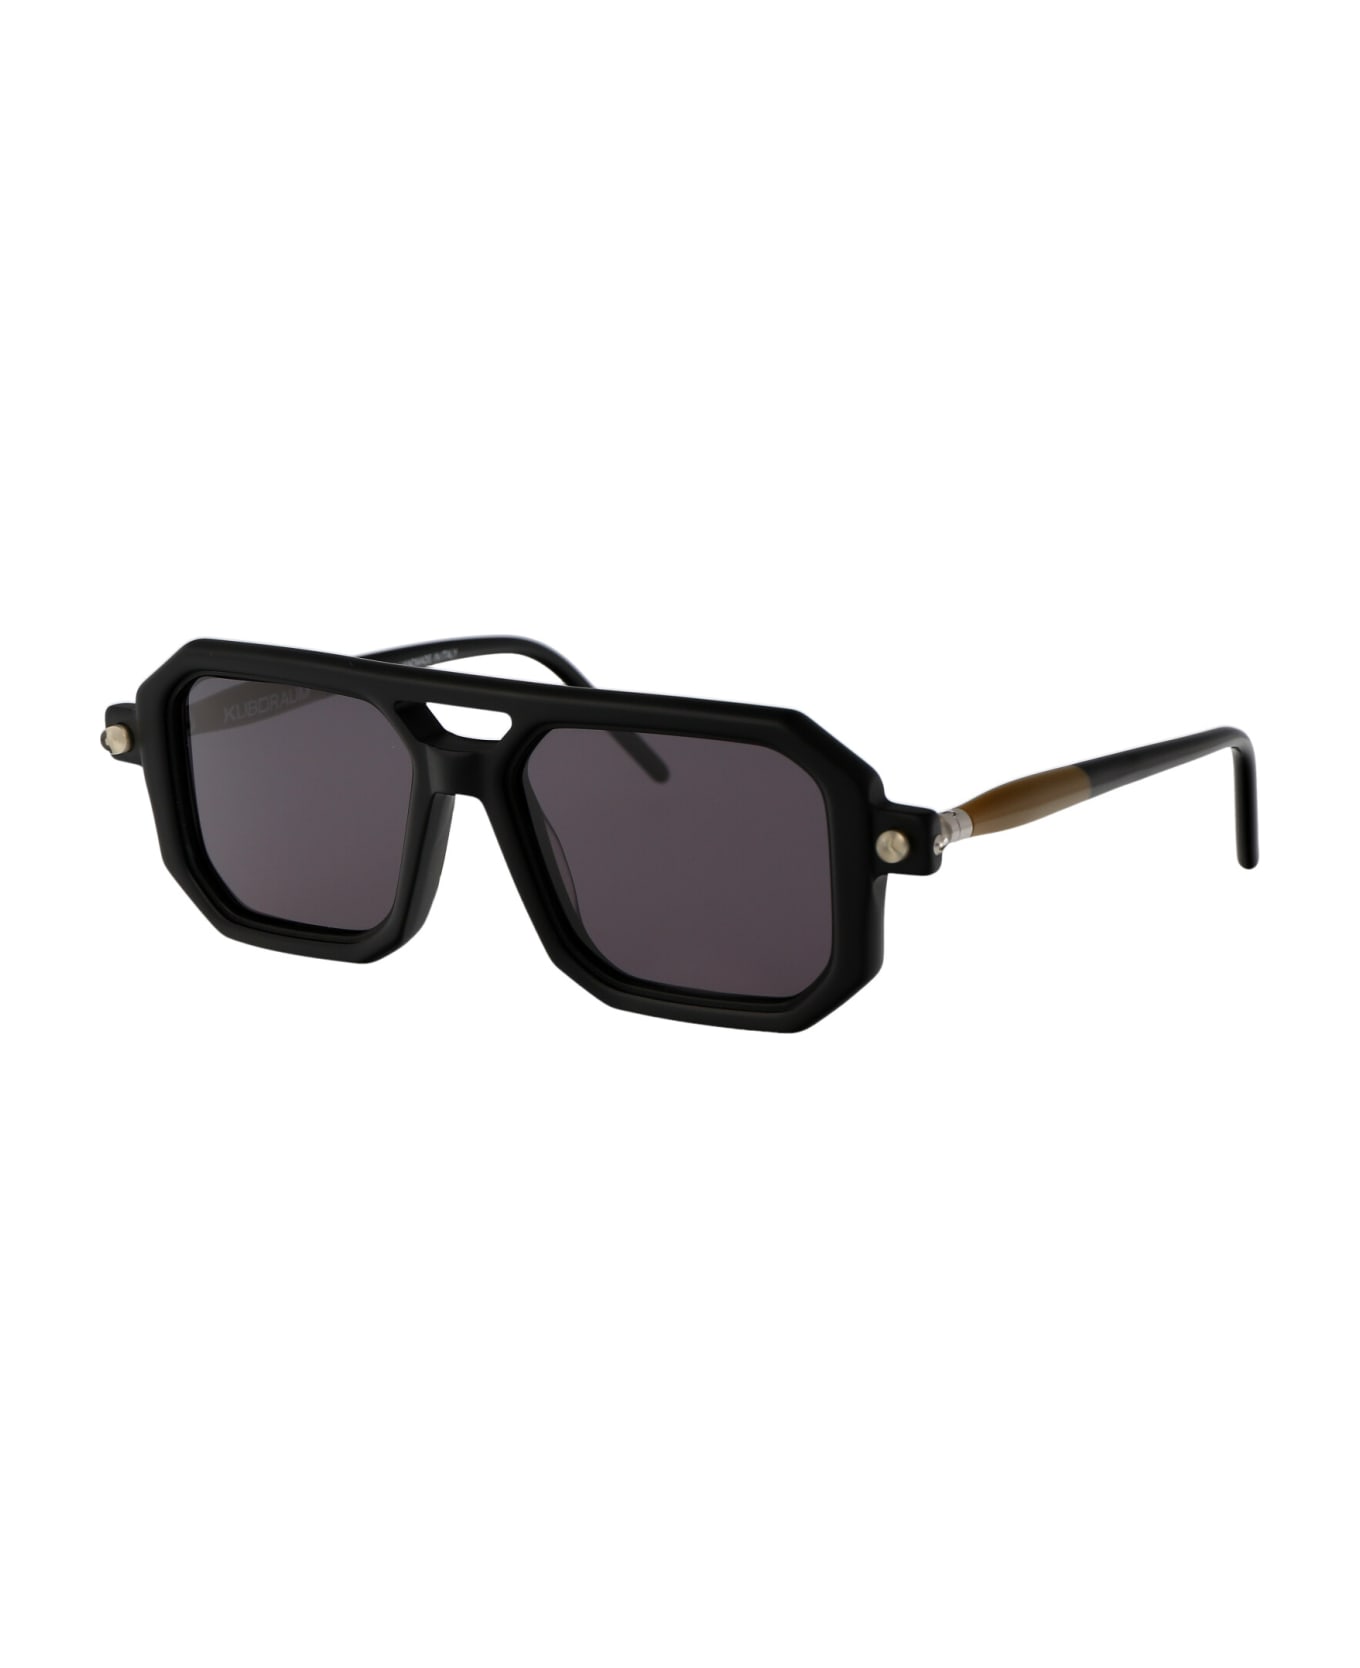 Kuboraum Maske P8 Sunglasses - BMK 2grey サングラス